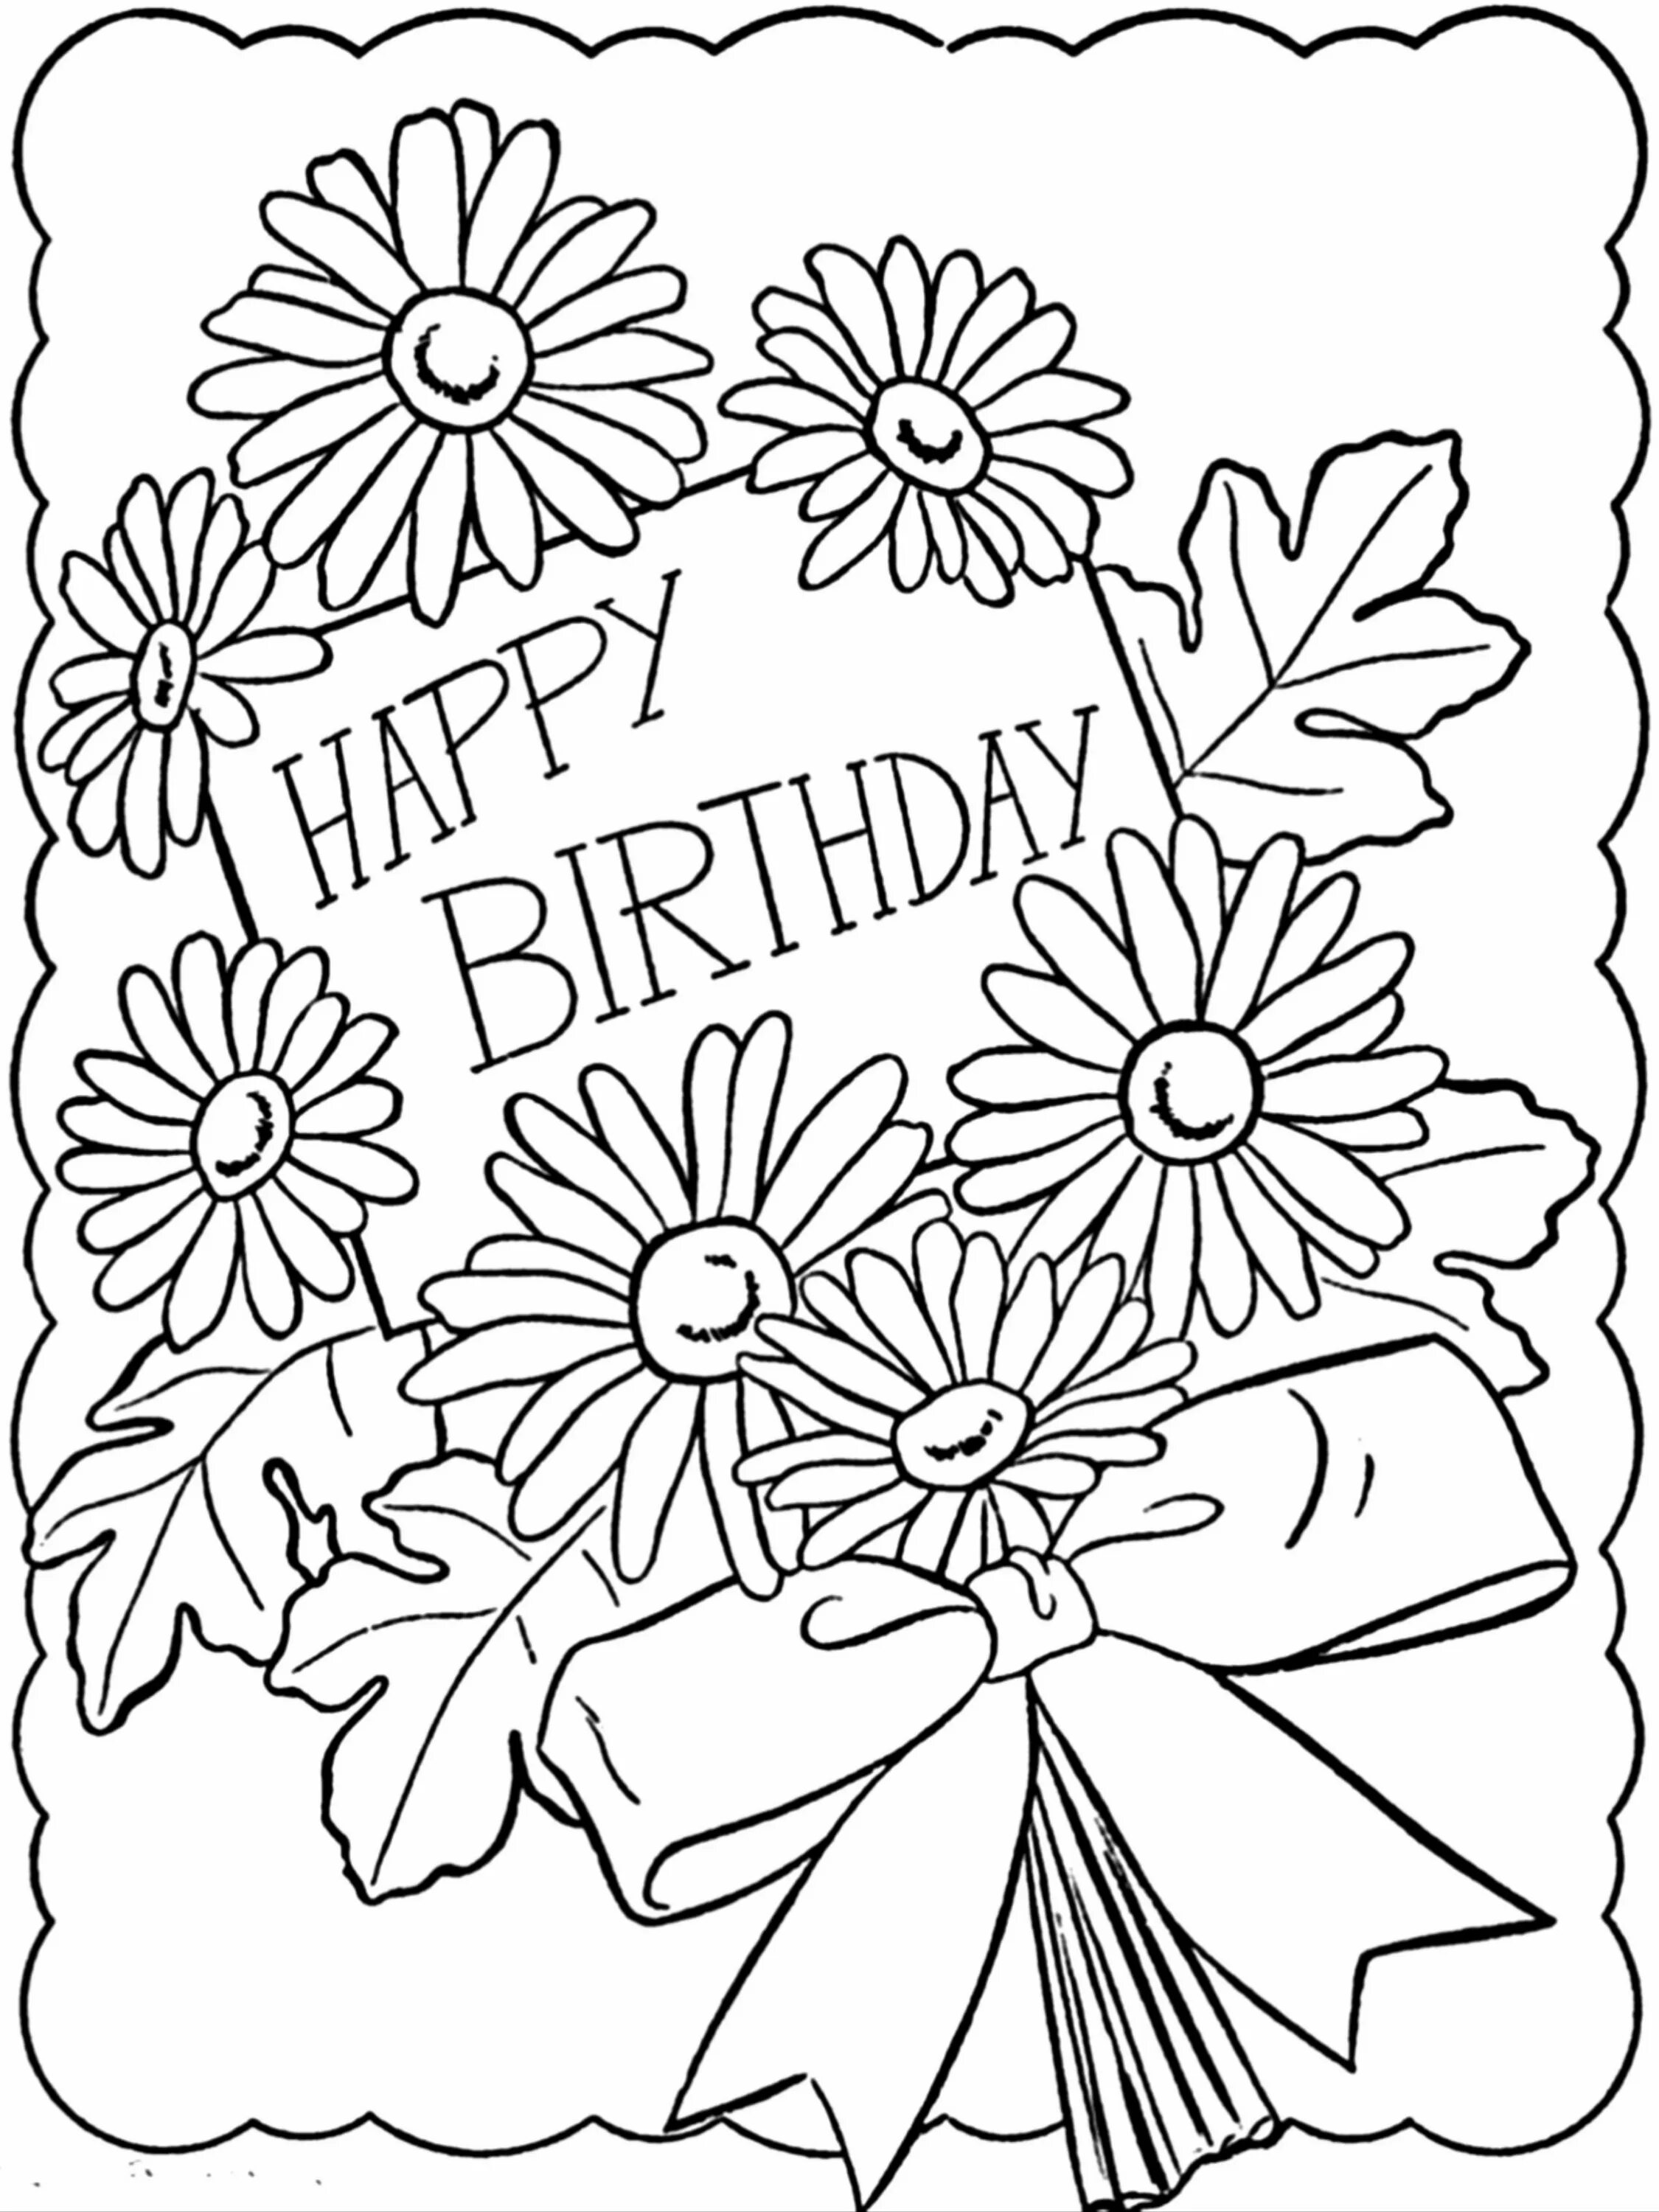 Color-zealous happy birthday teacher coloring page